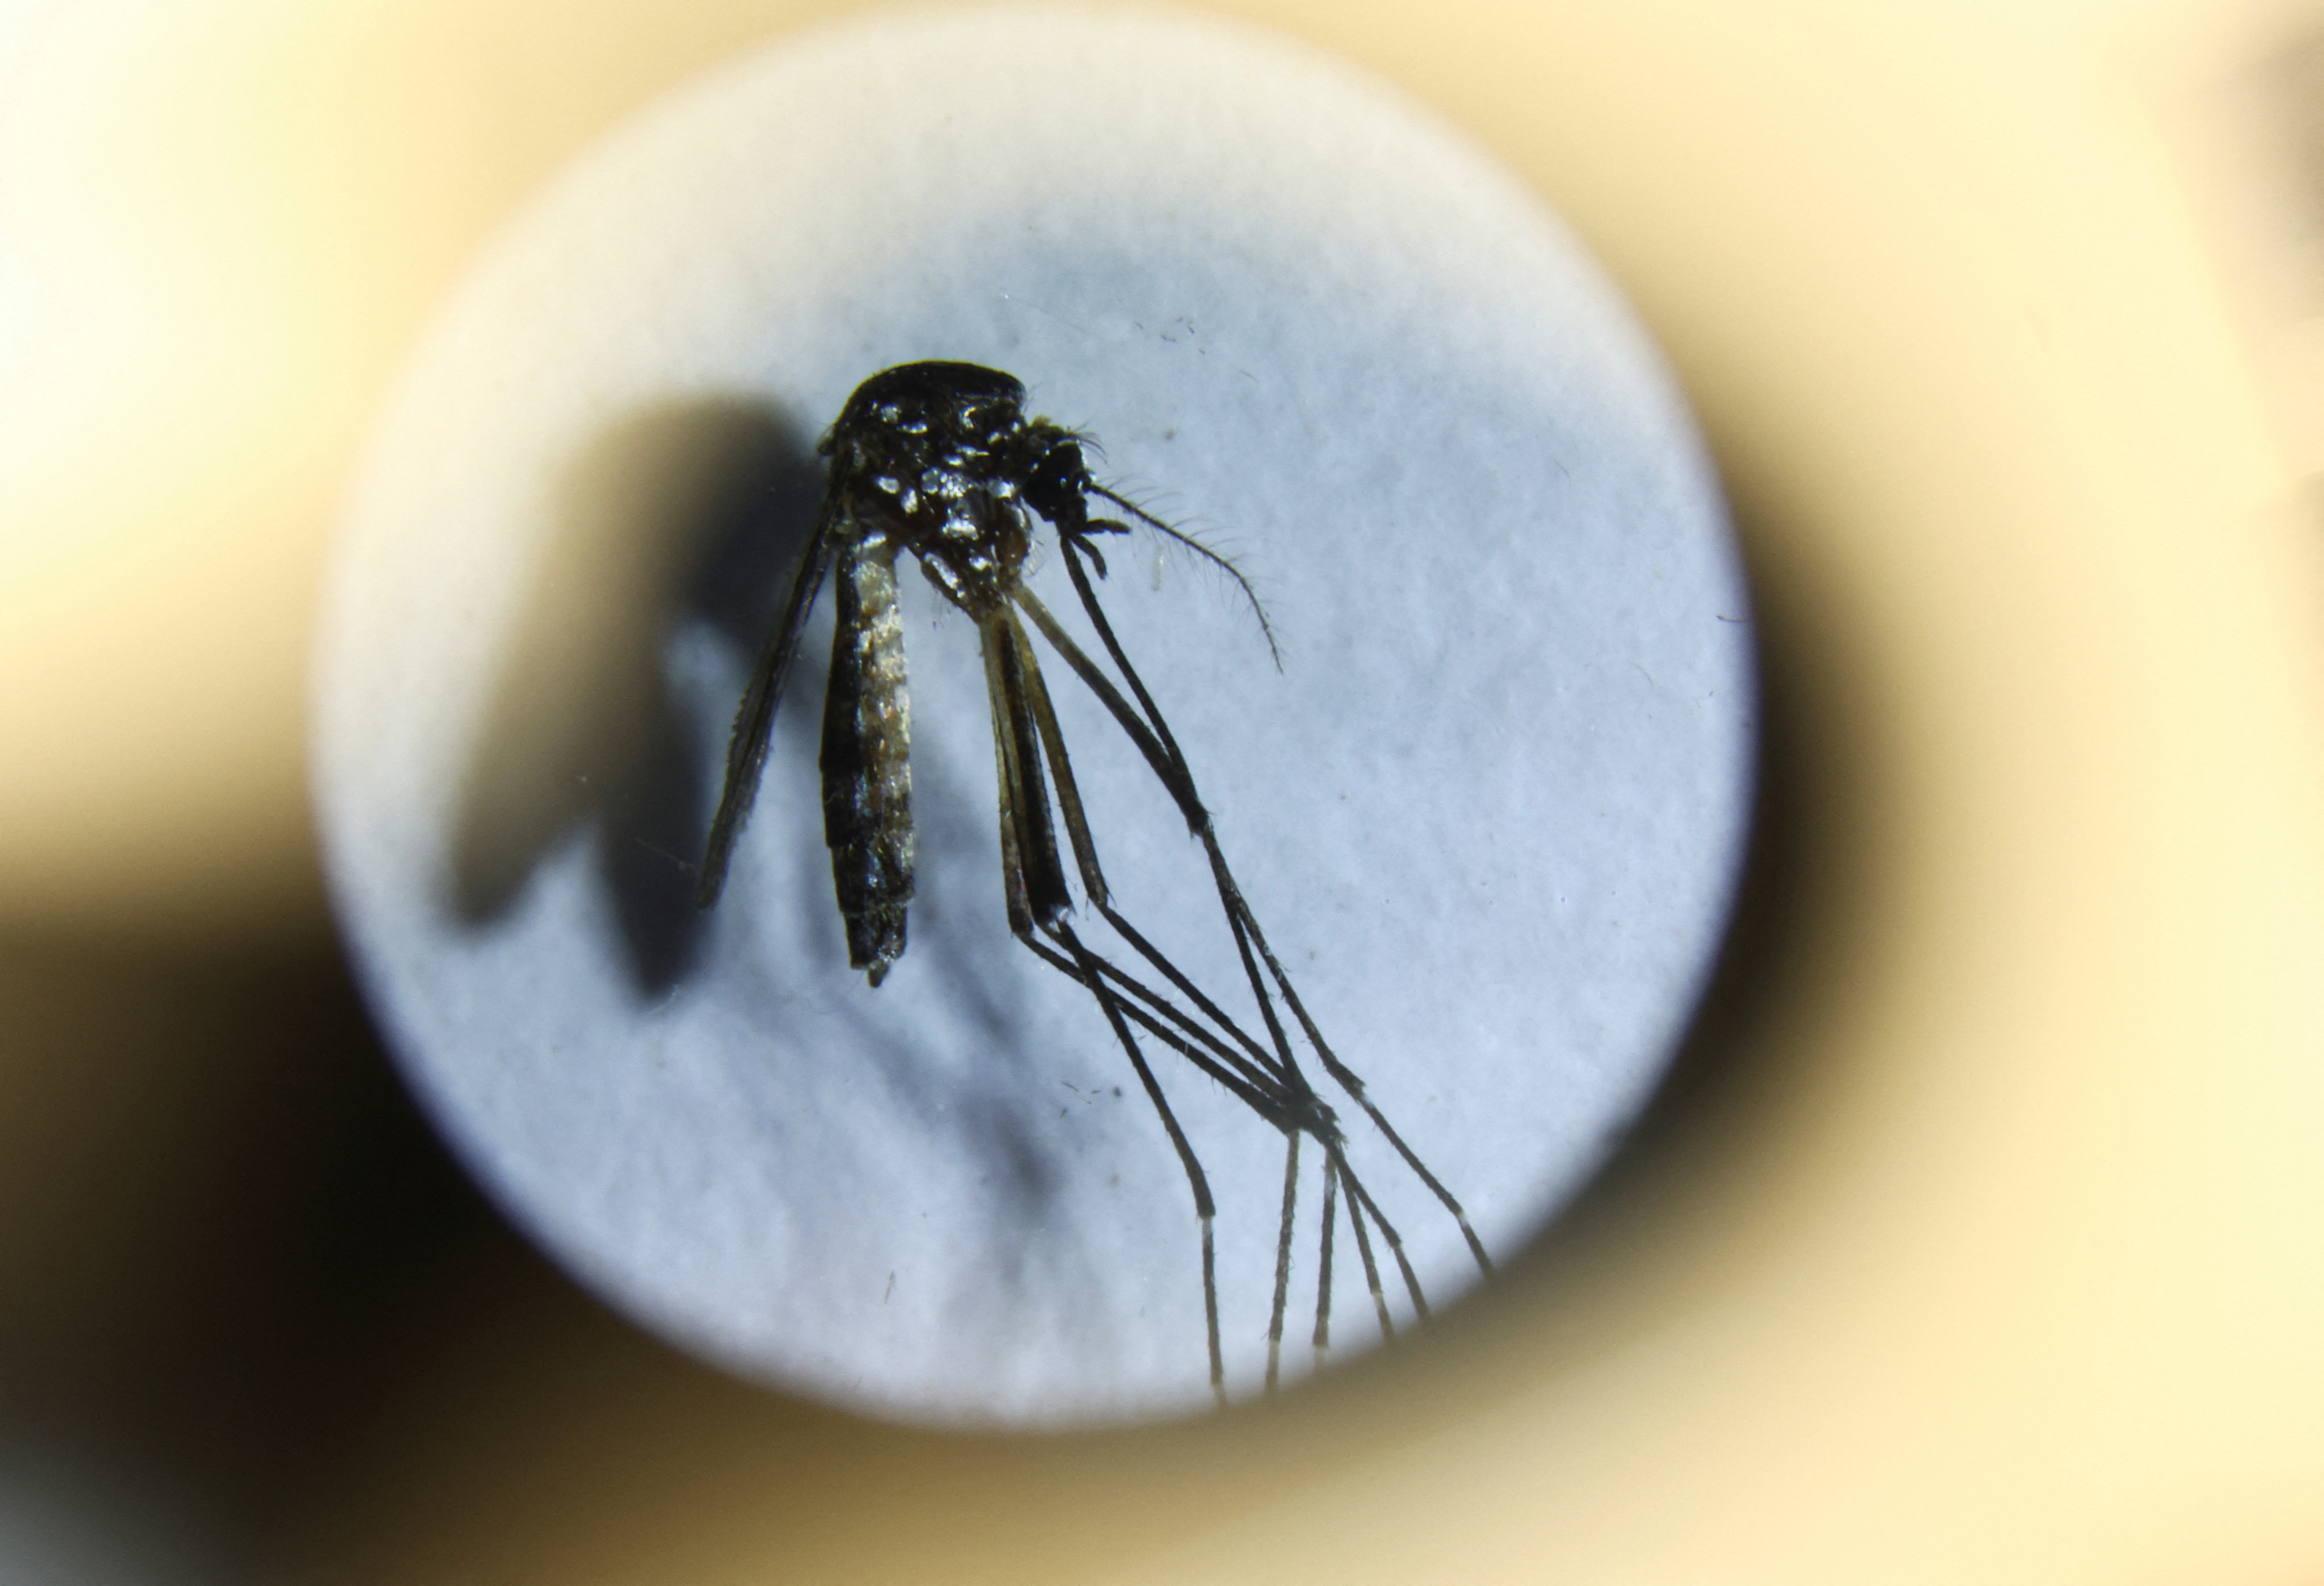 Argentina undergoes “major outbreak of dengue